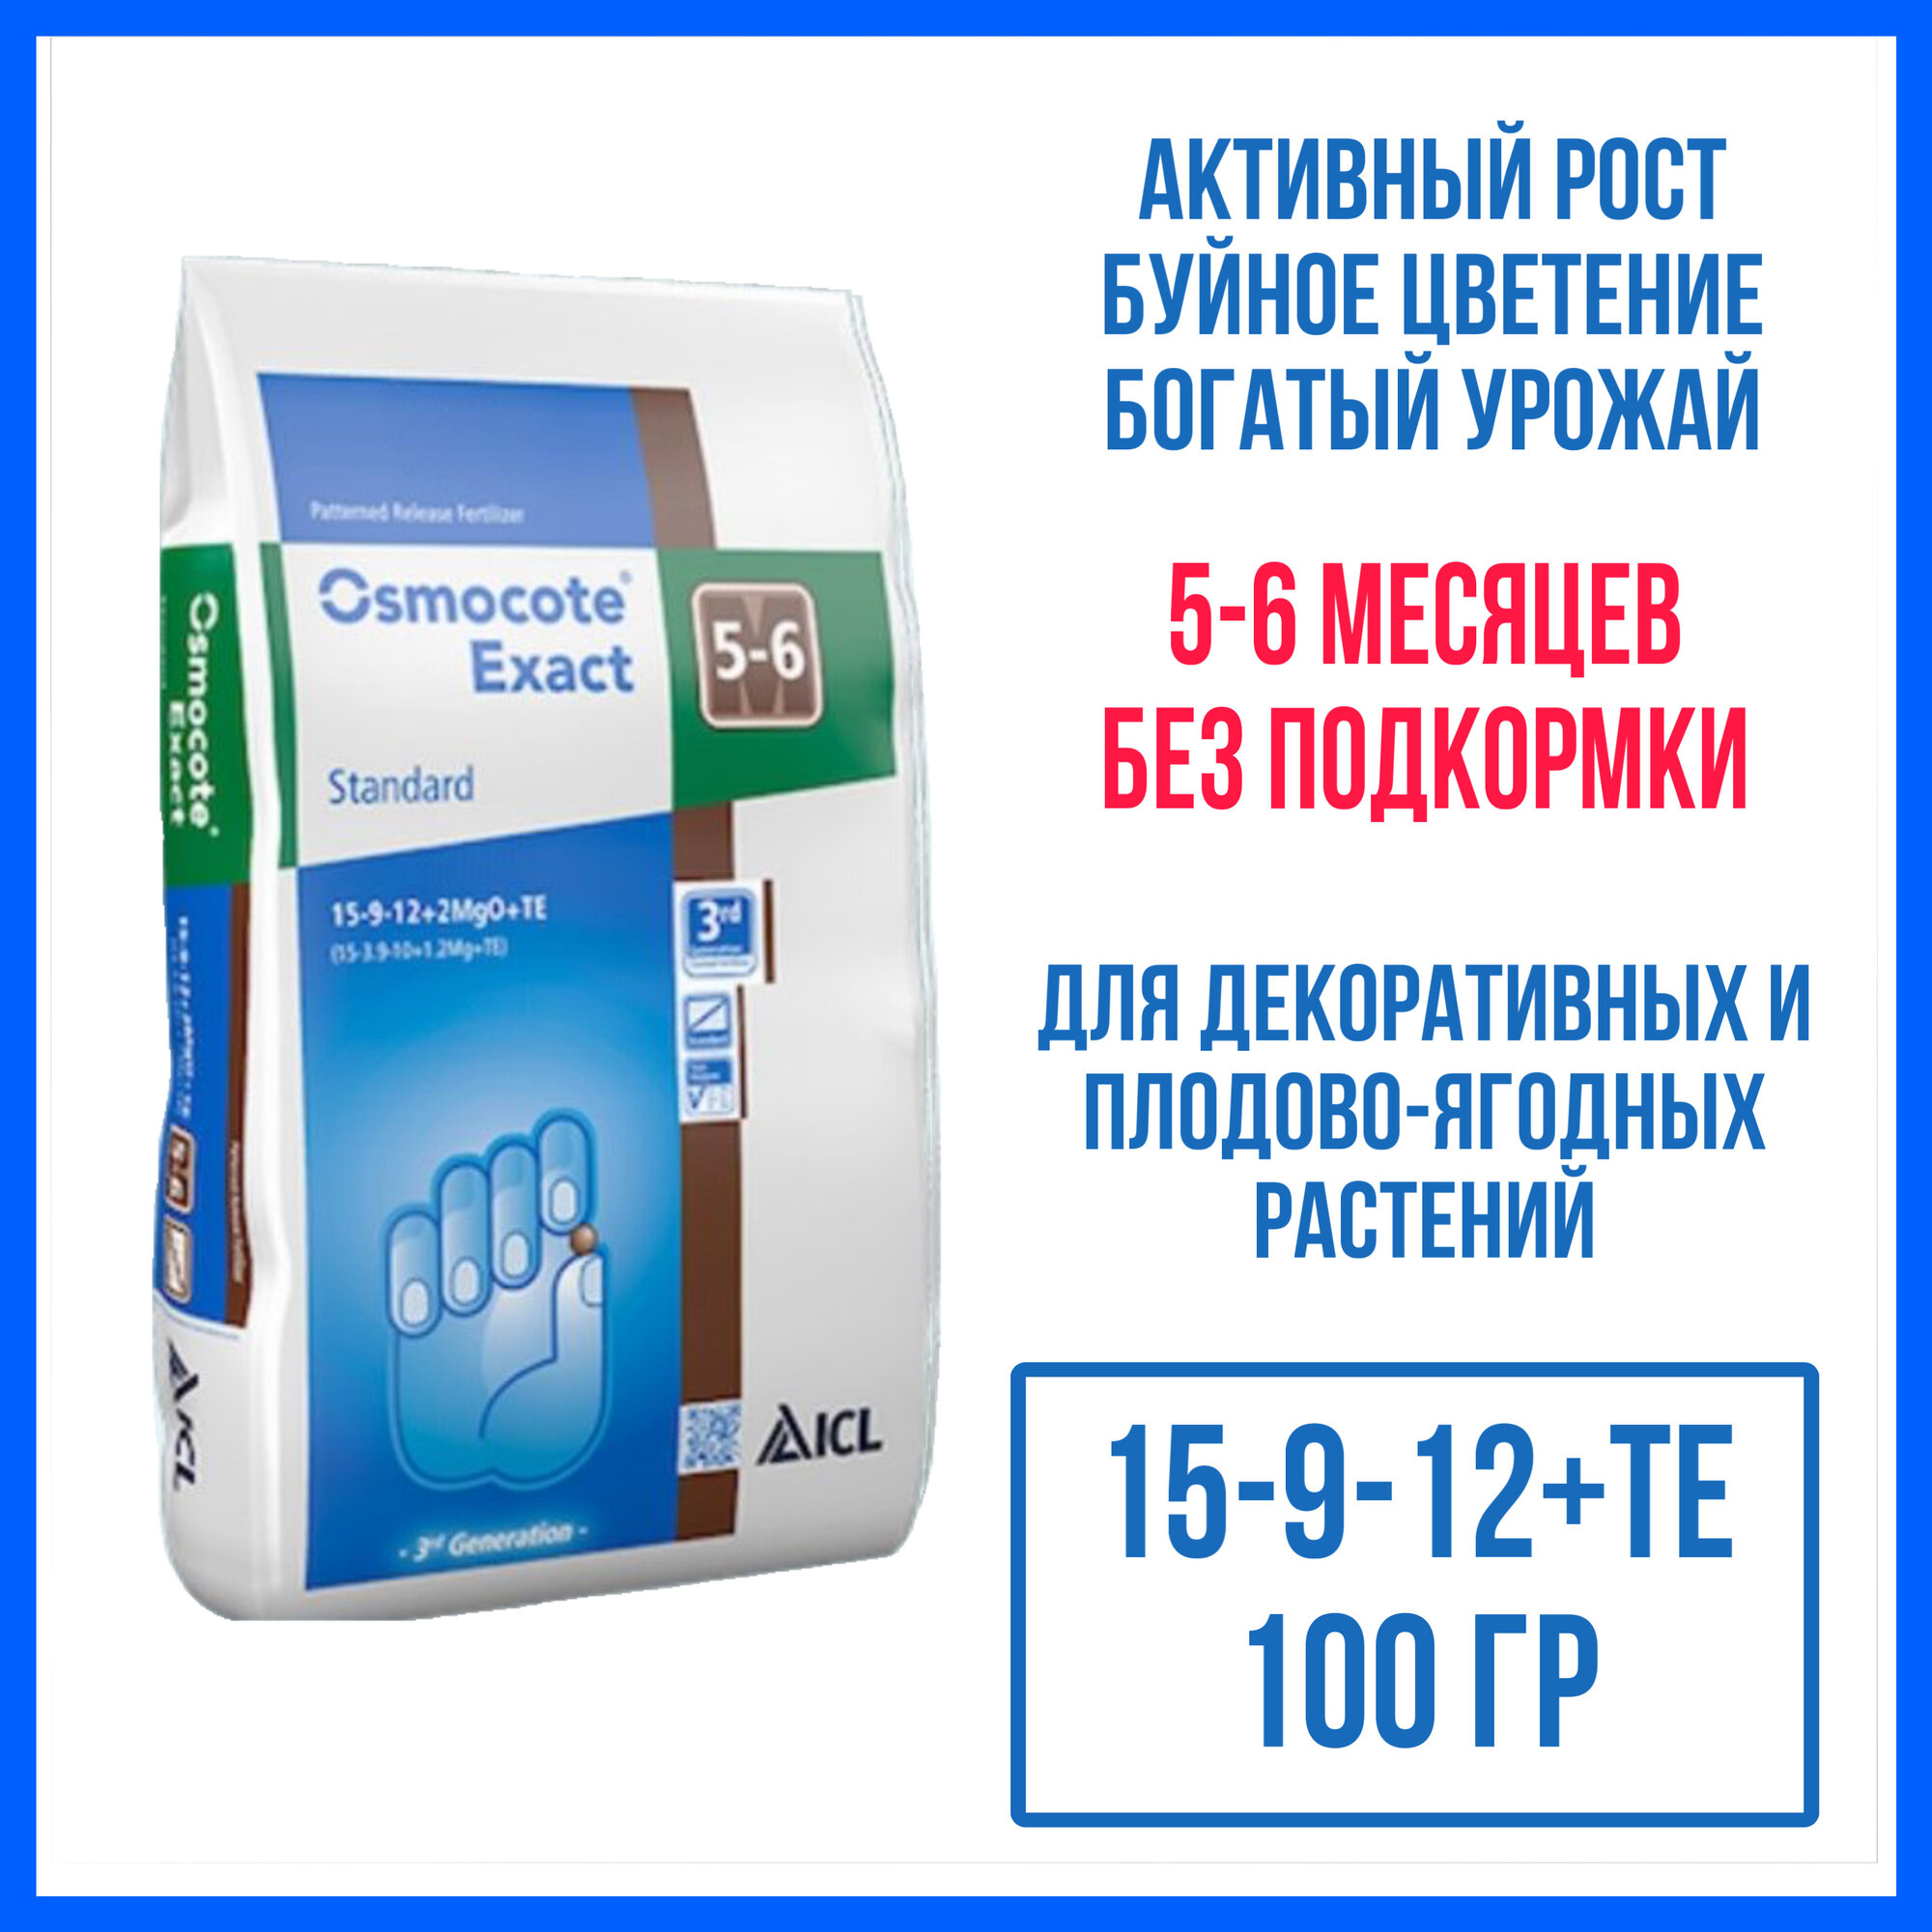 Удобрение Osmocote Exact Standard 5-6 мес (15-9-12+2MGO+МЭ), 100 гр (ручная фасовка)